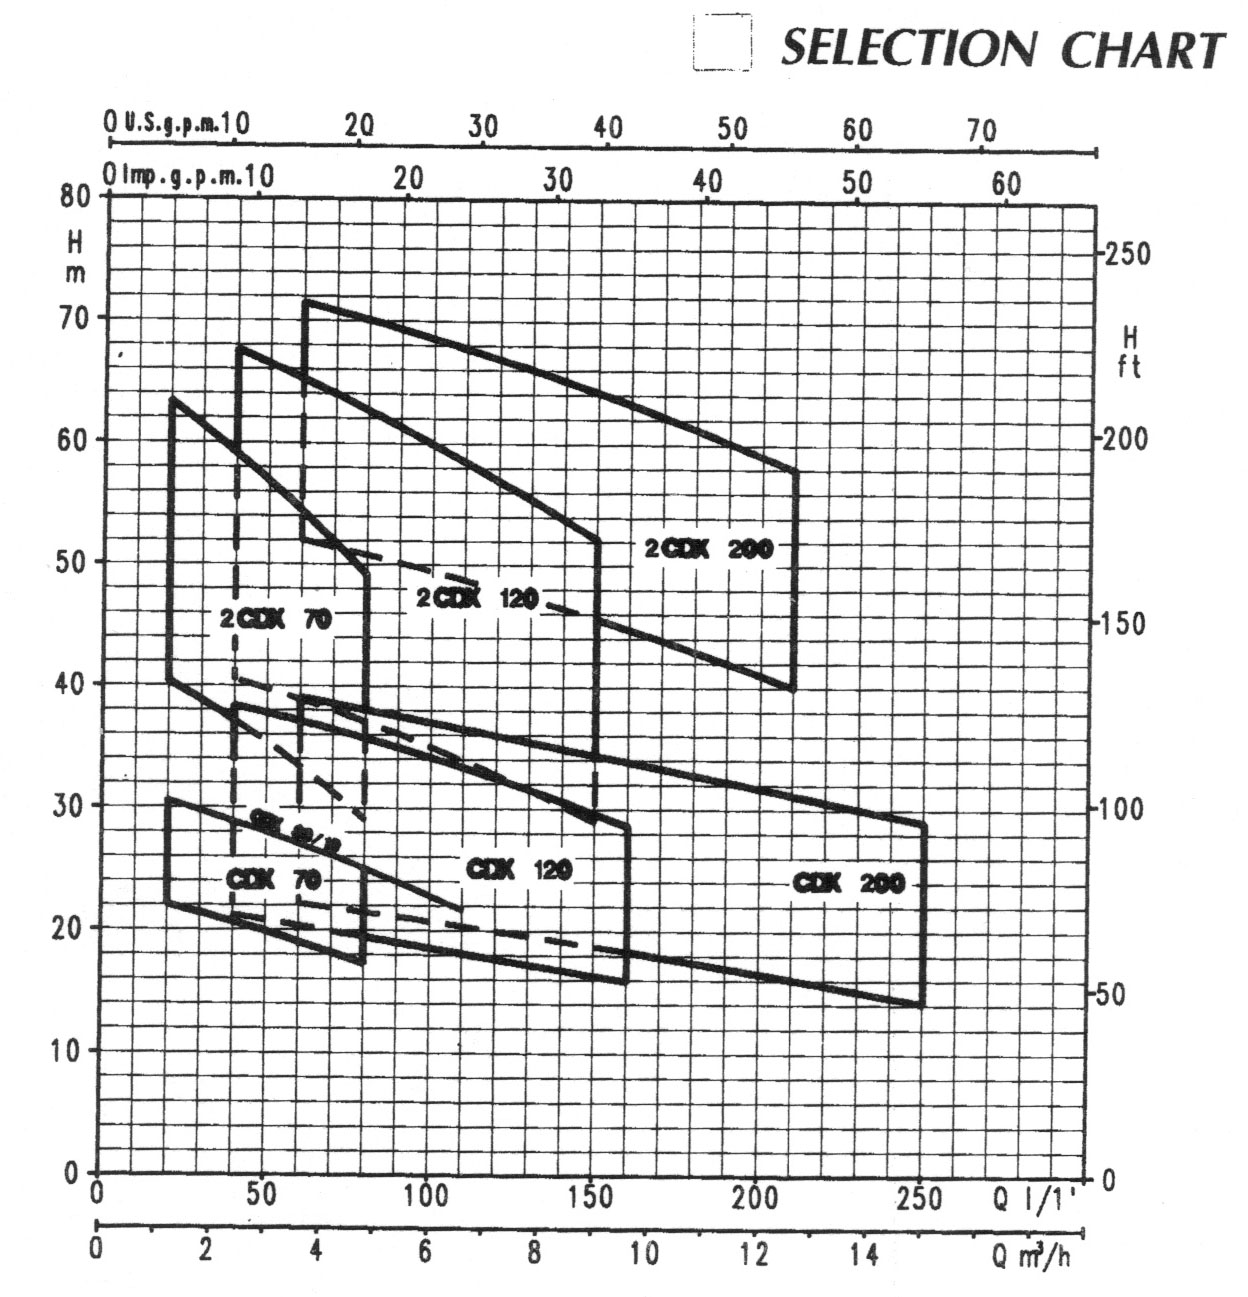 Cdx Chart